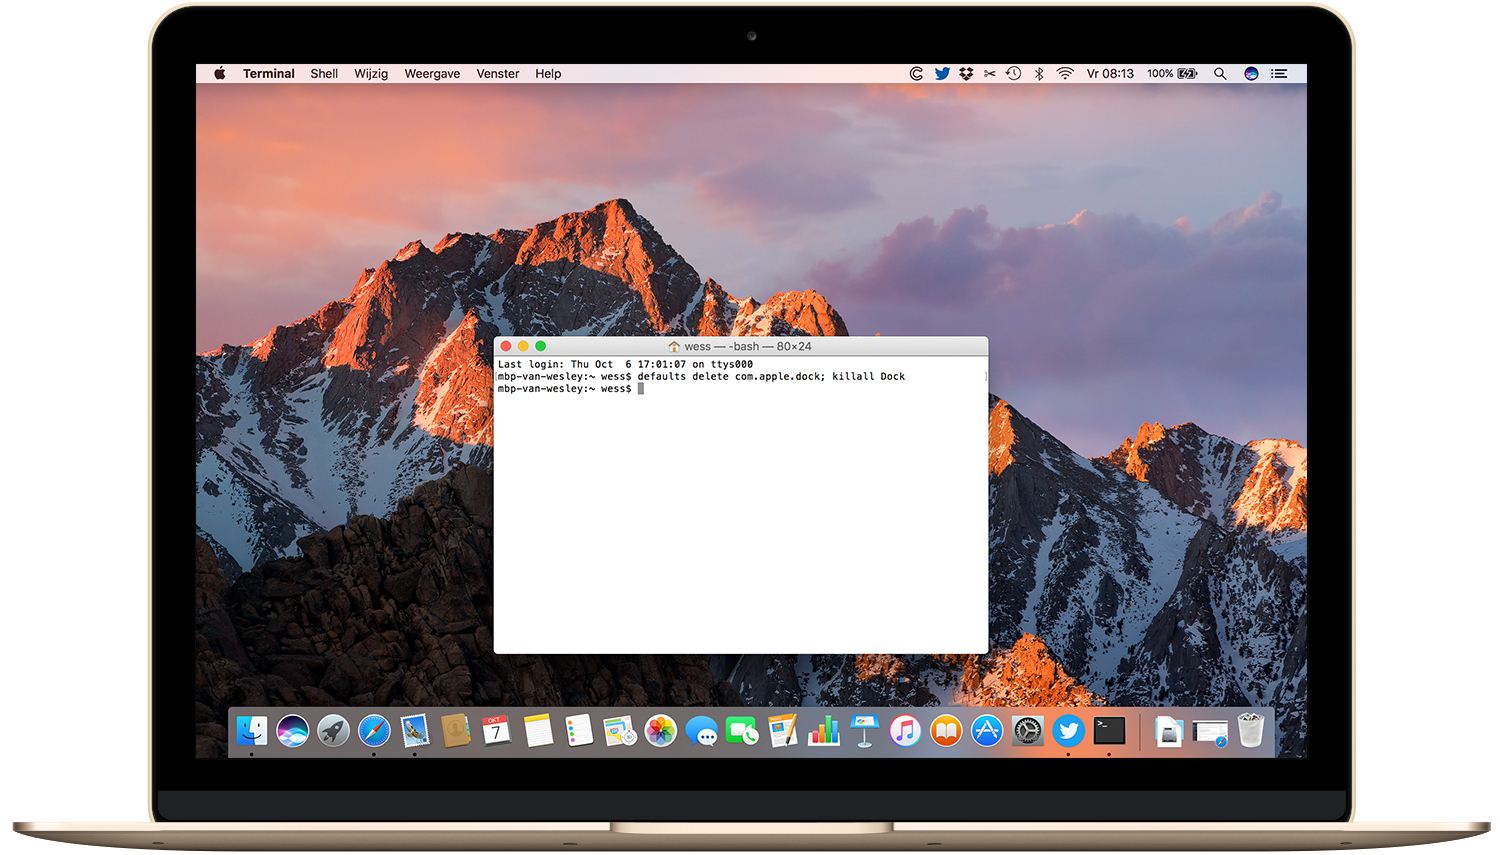 mac os skin for windows 10 nexus dock